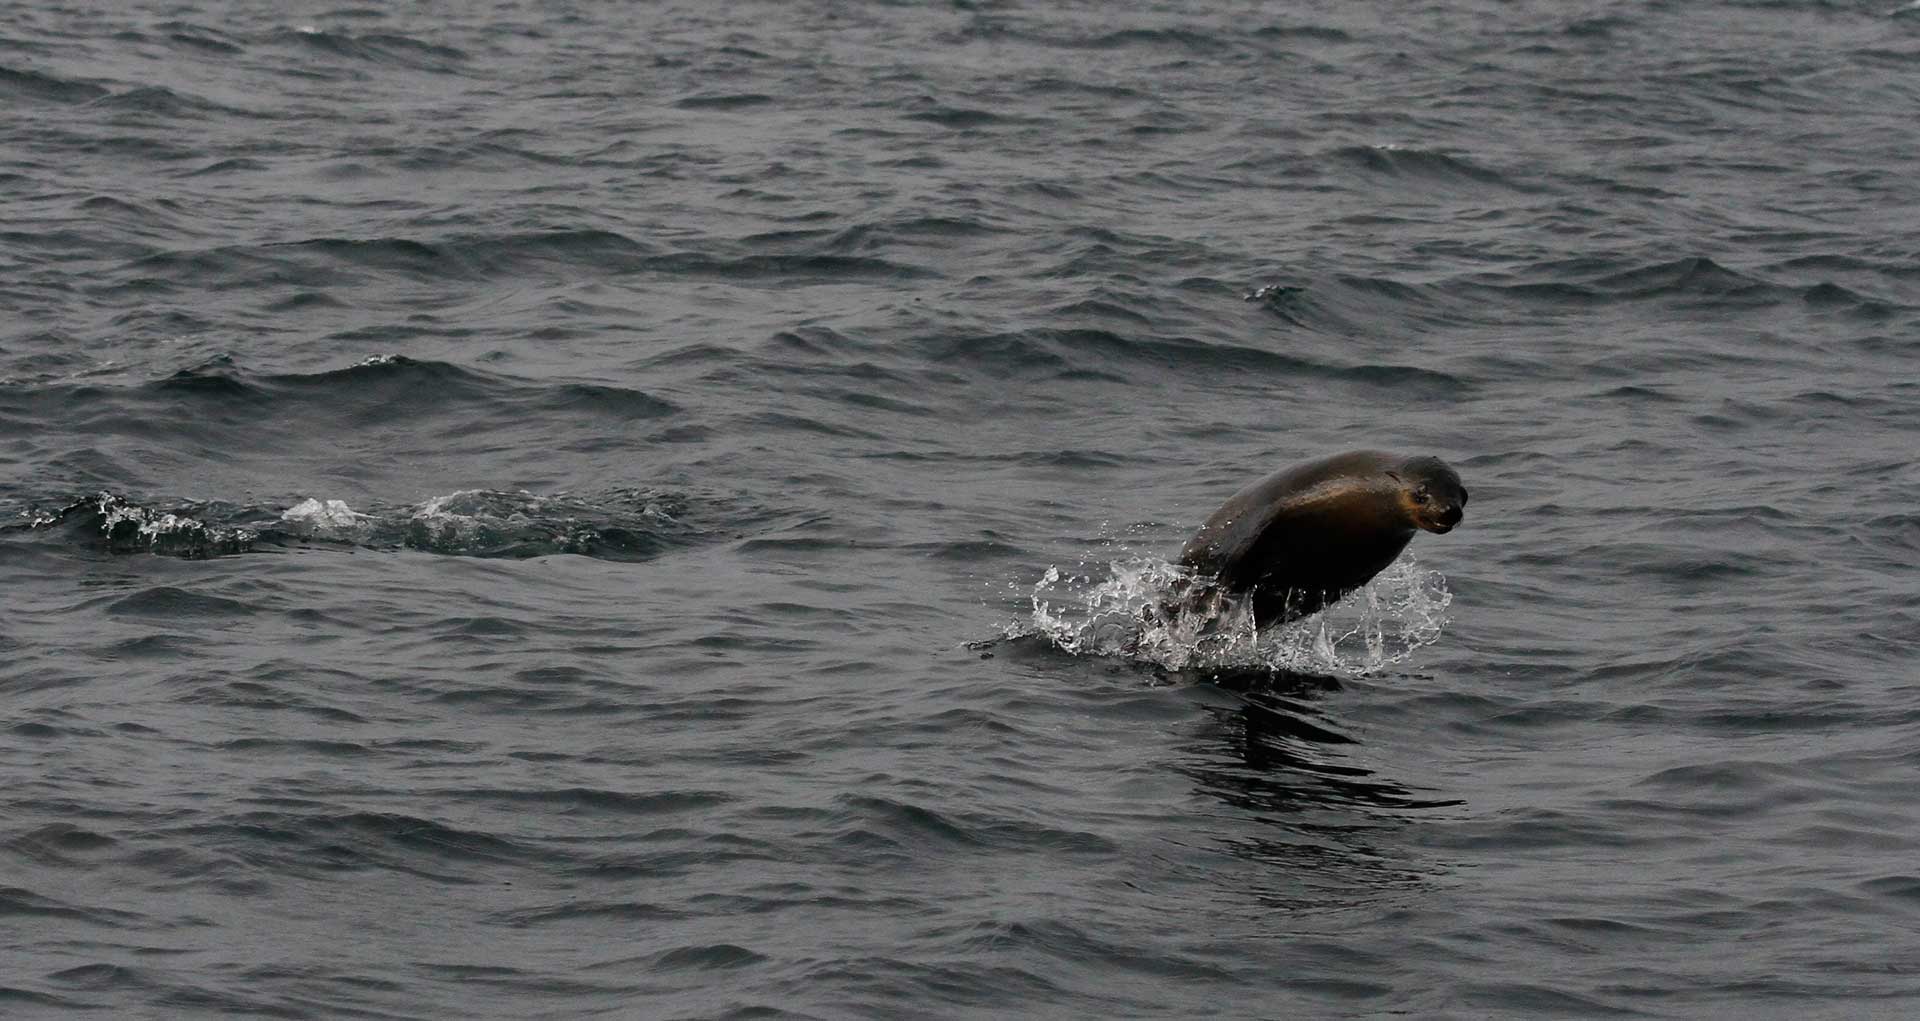 KOCKalison - a seal's survival guide